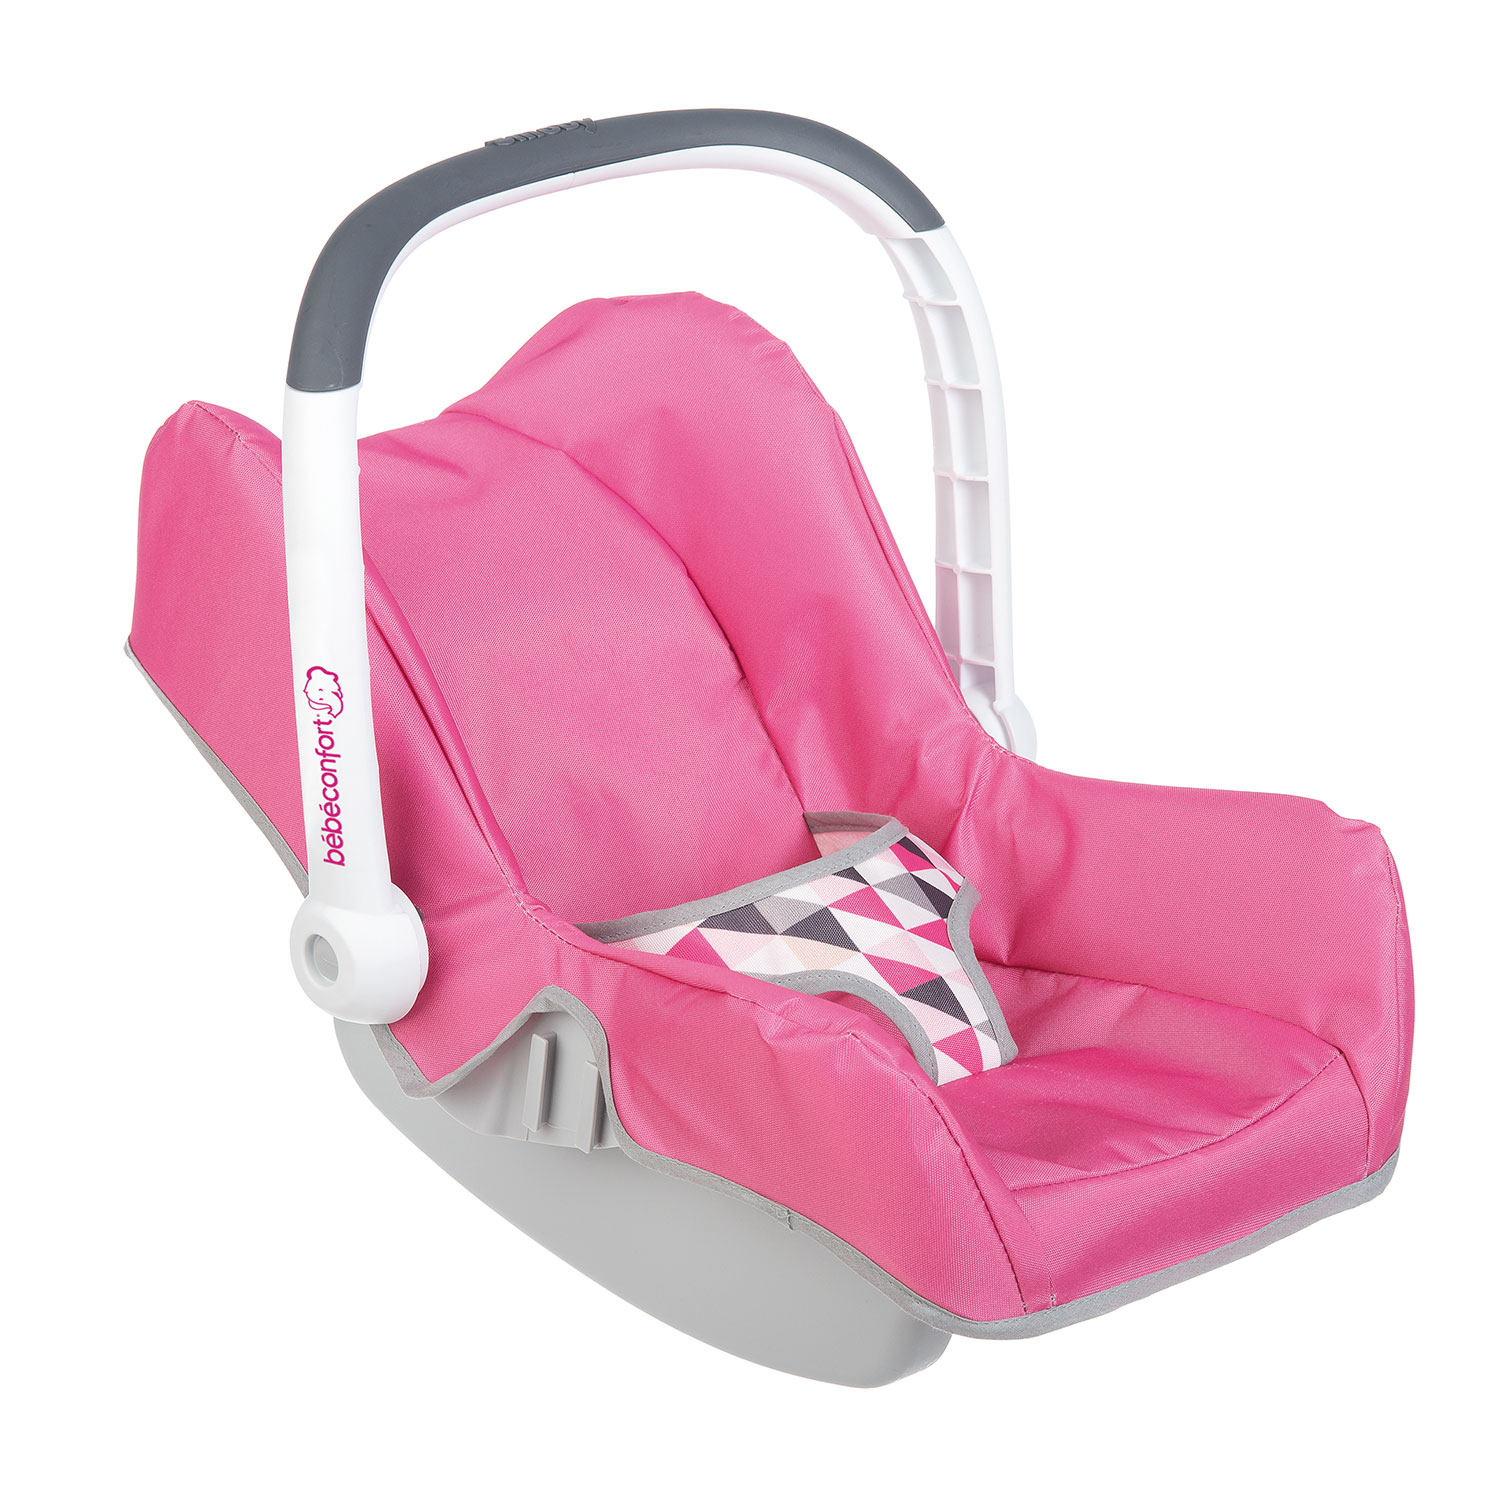 af hebben wenselijk Ministerie Smoby Baby Confort Maxi-Cosi Car seat | Thimble Toys